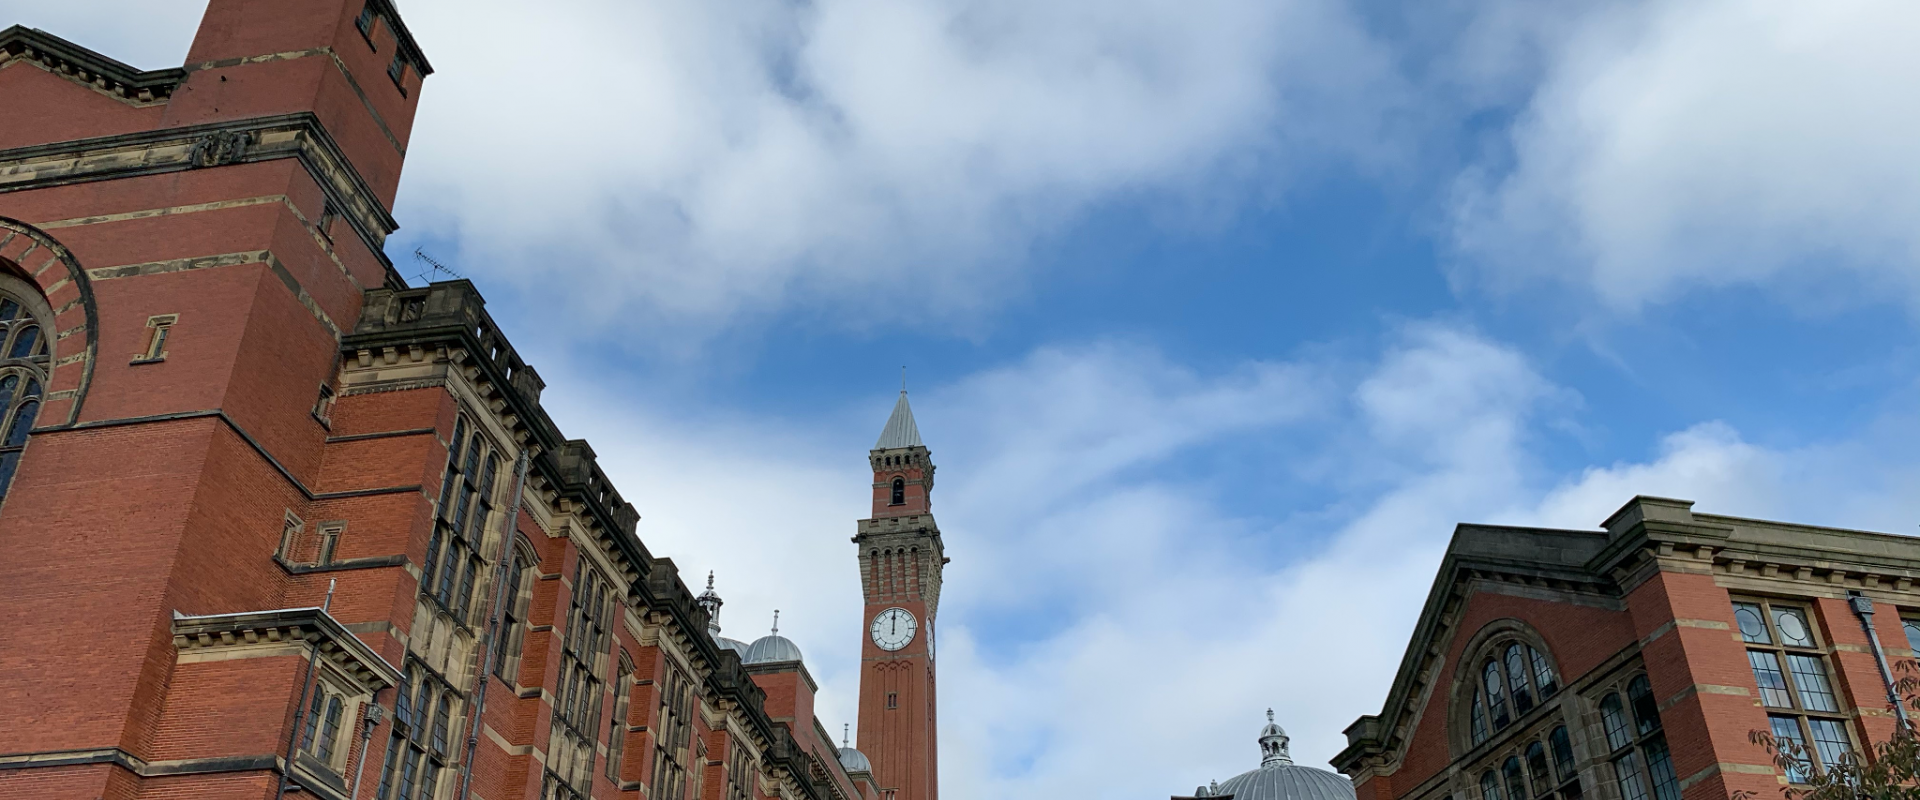 University of Birmingham redbrick buildings 